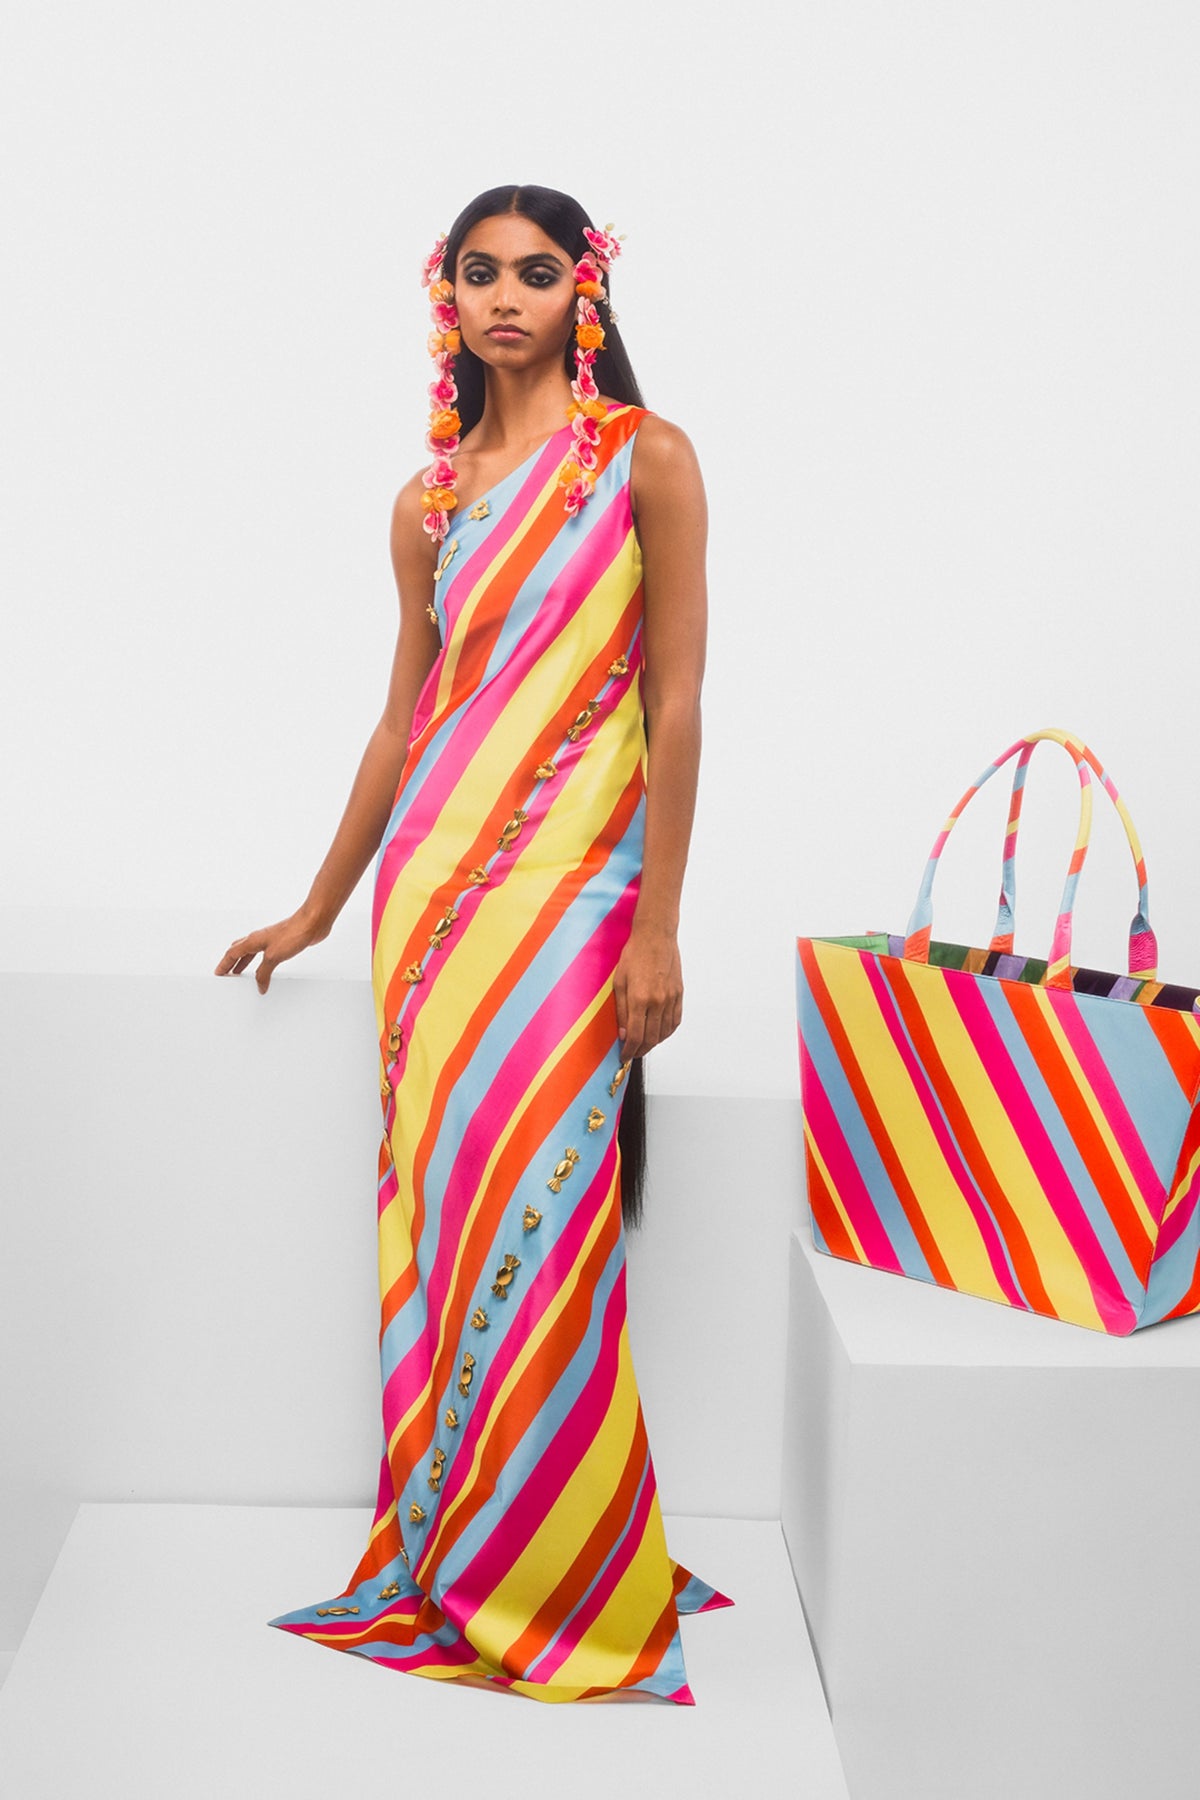 The Tutti Fruity Candy Stripe Dress